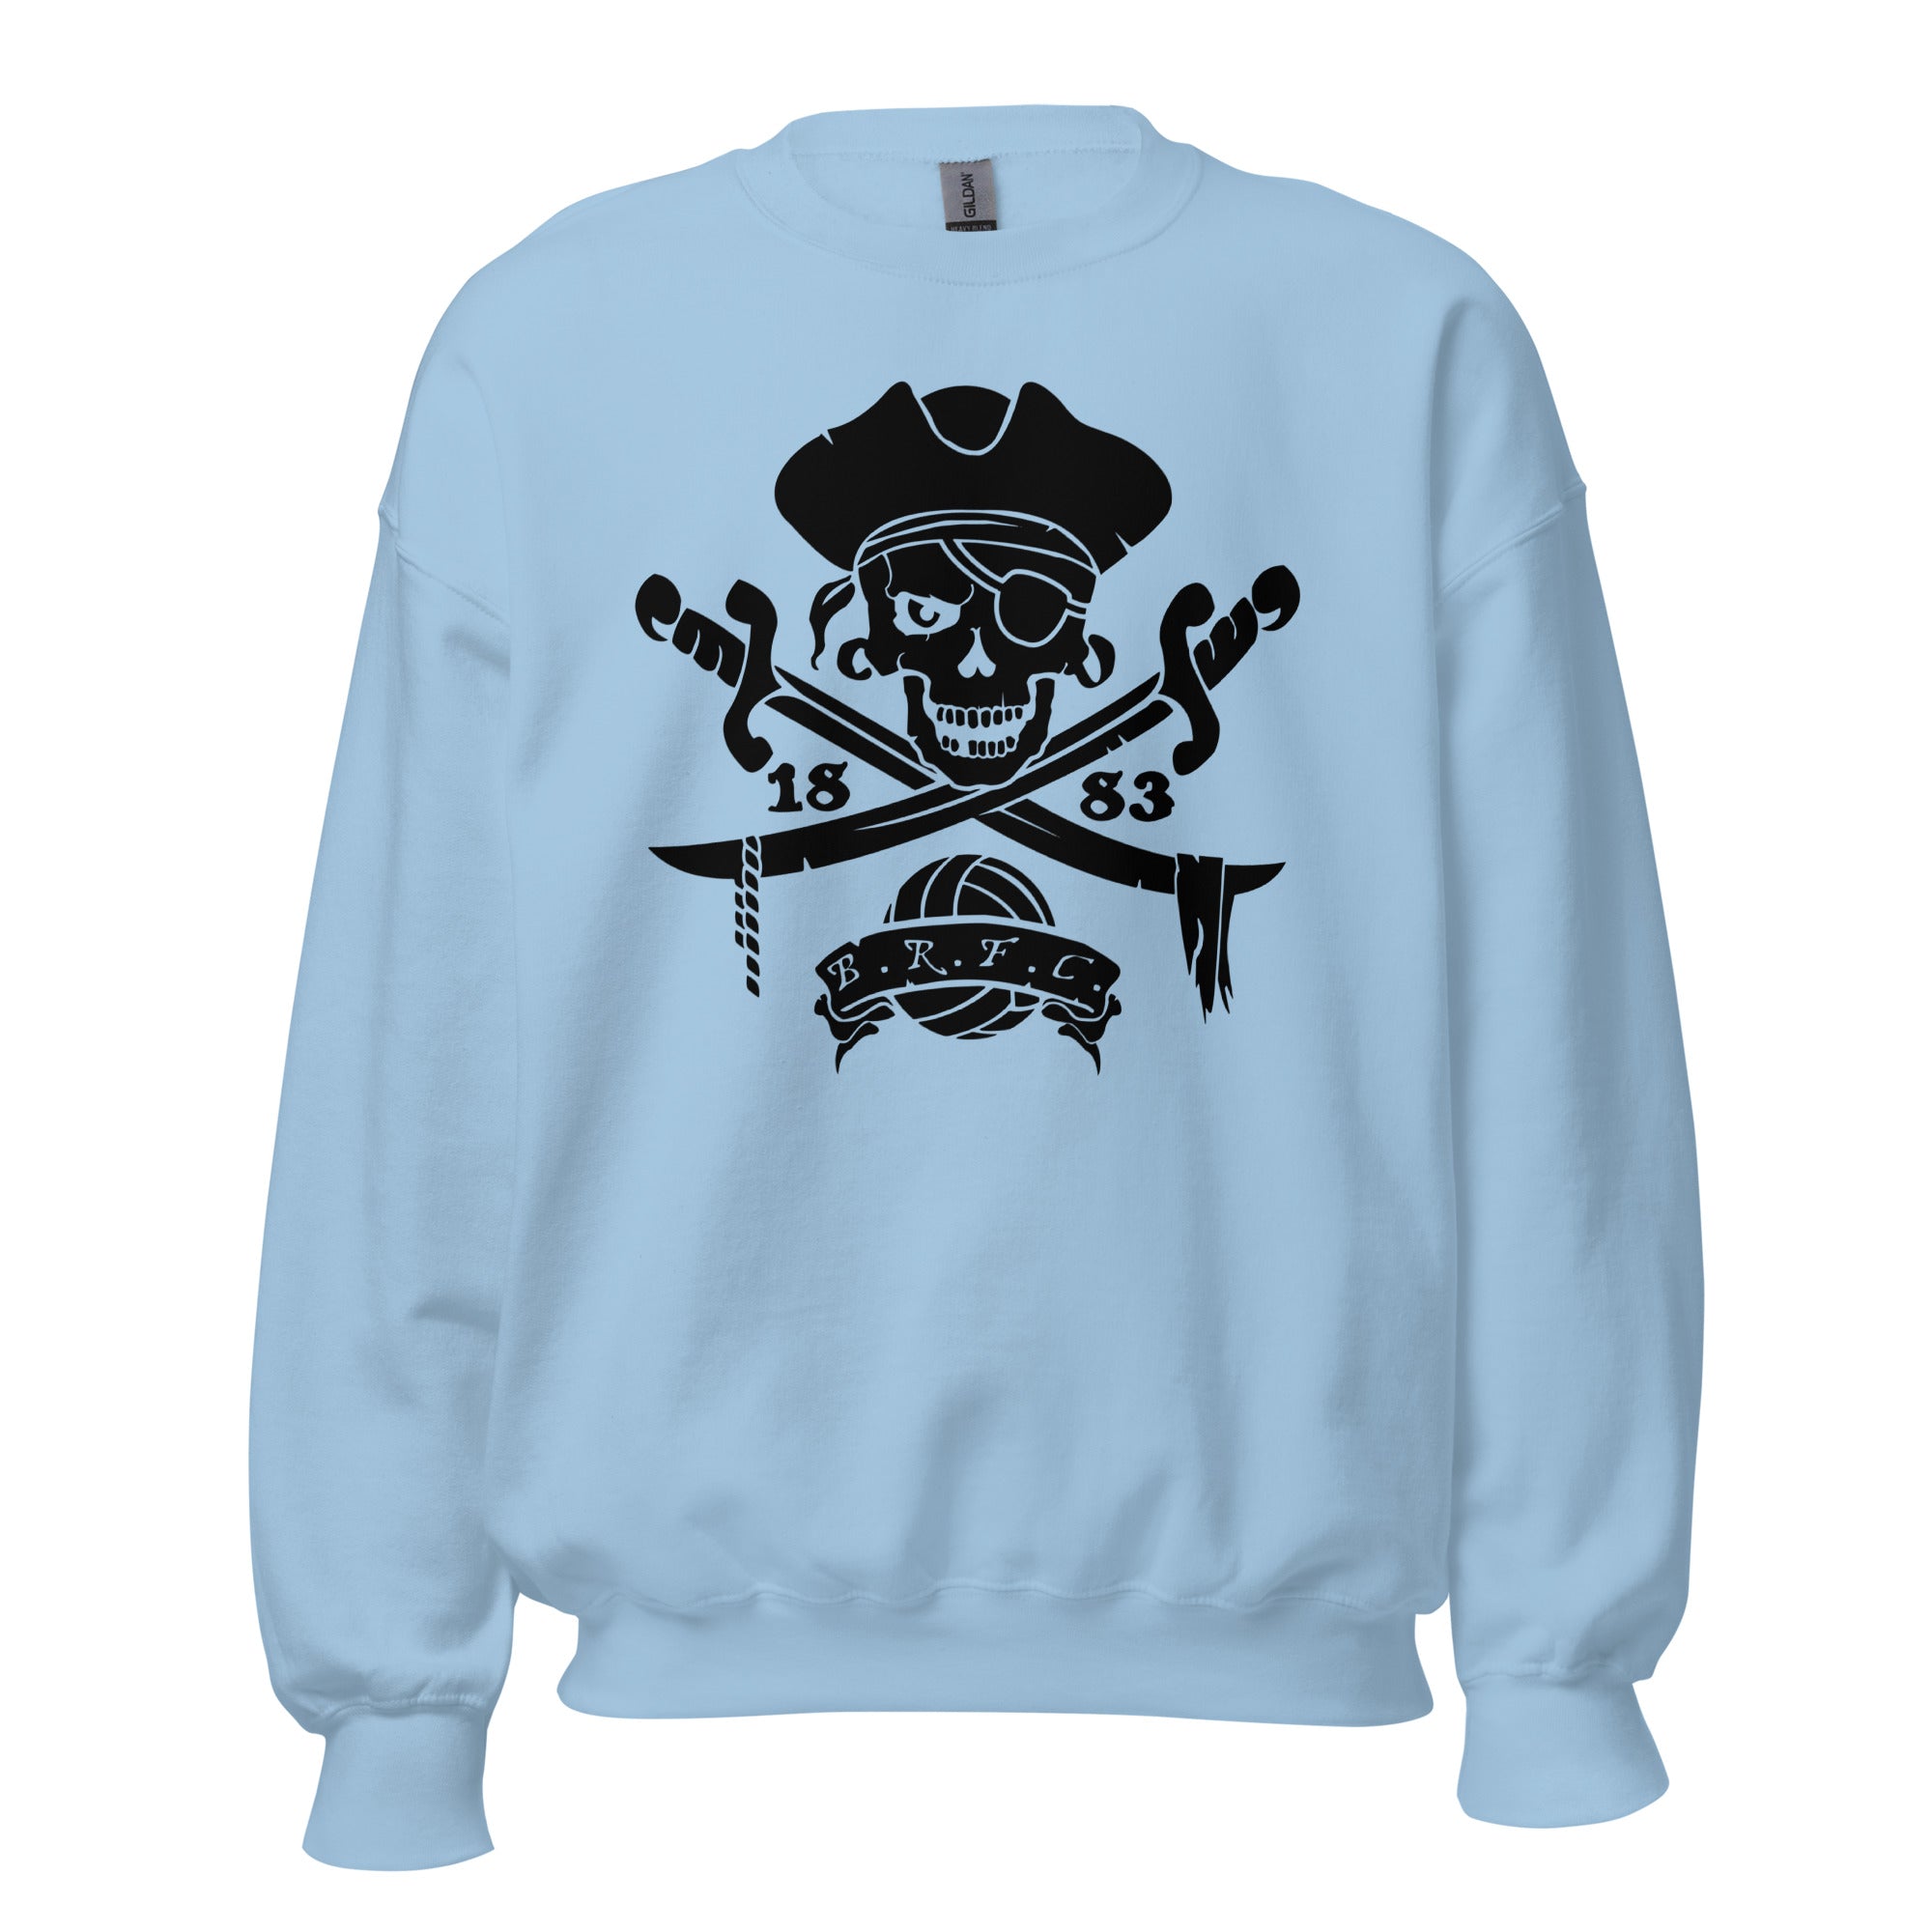 Unisex Crew Neck Sweatshirt - Pirate B.R.F.C. 1883 - GRAPHIC T-SHIRTS